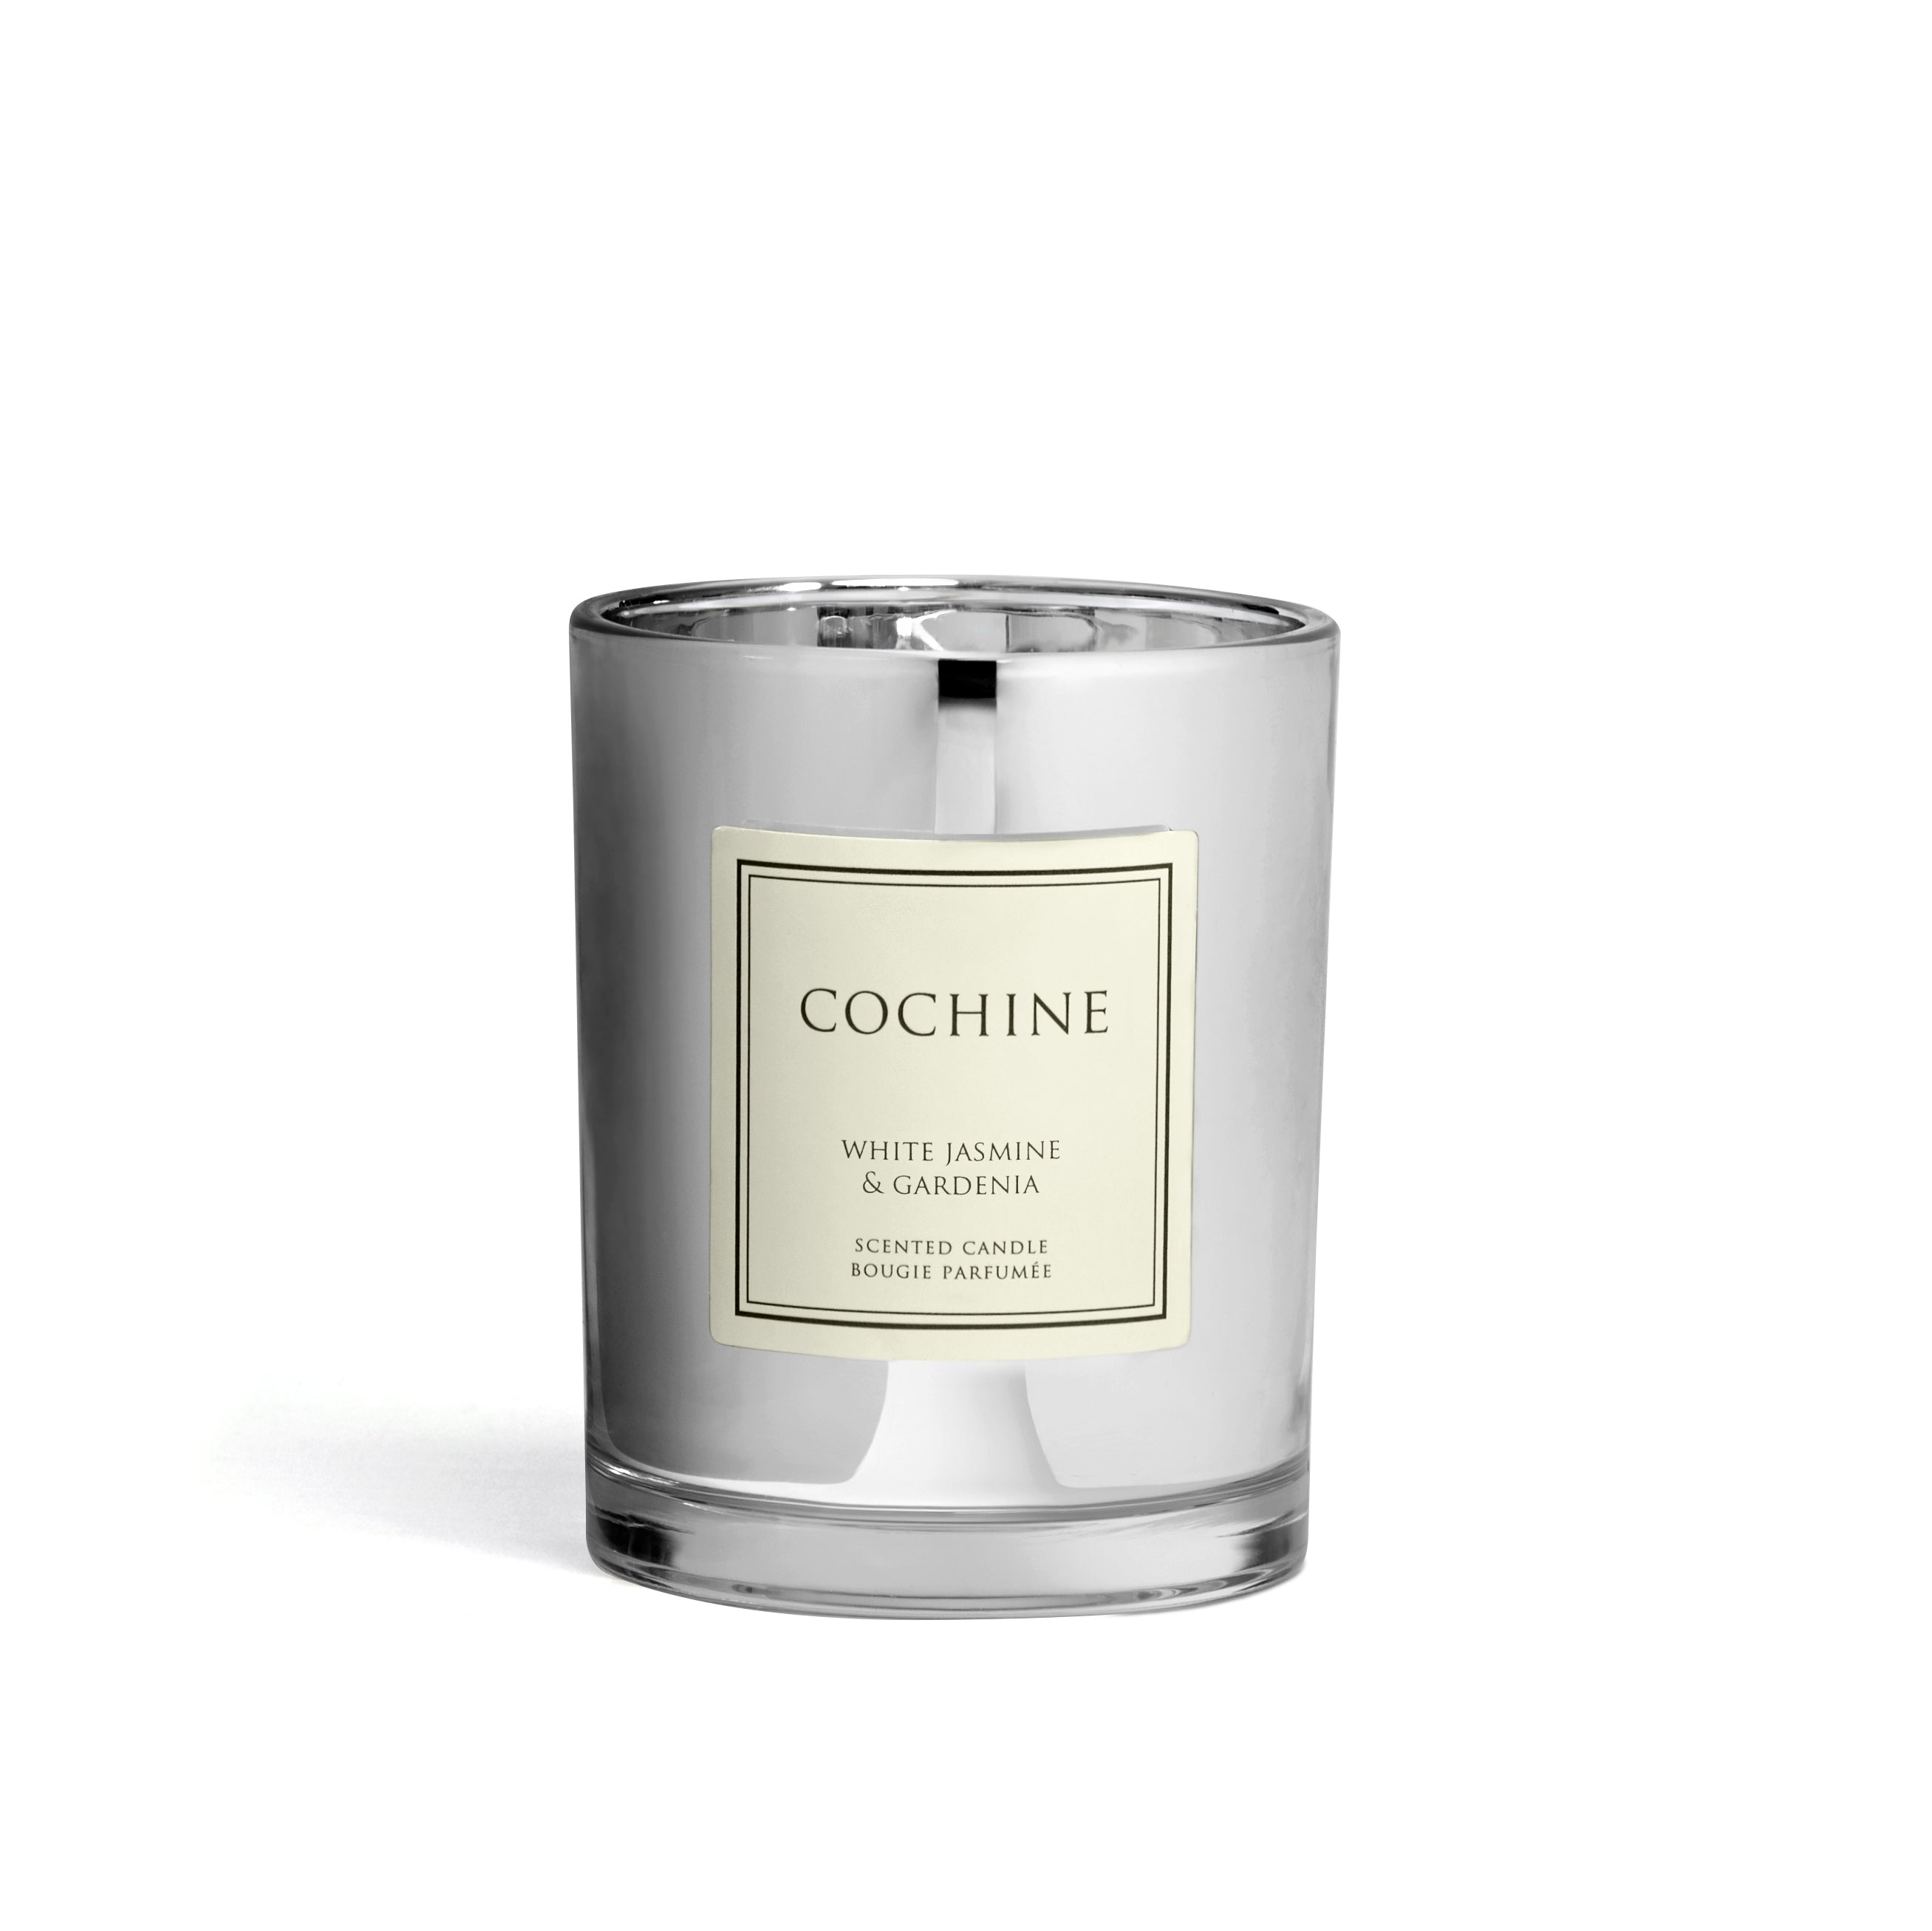 Cochine White Jasmine & Gardenia Scented Candle